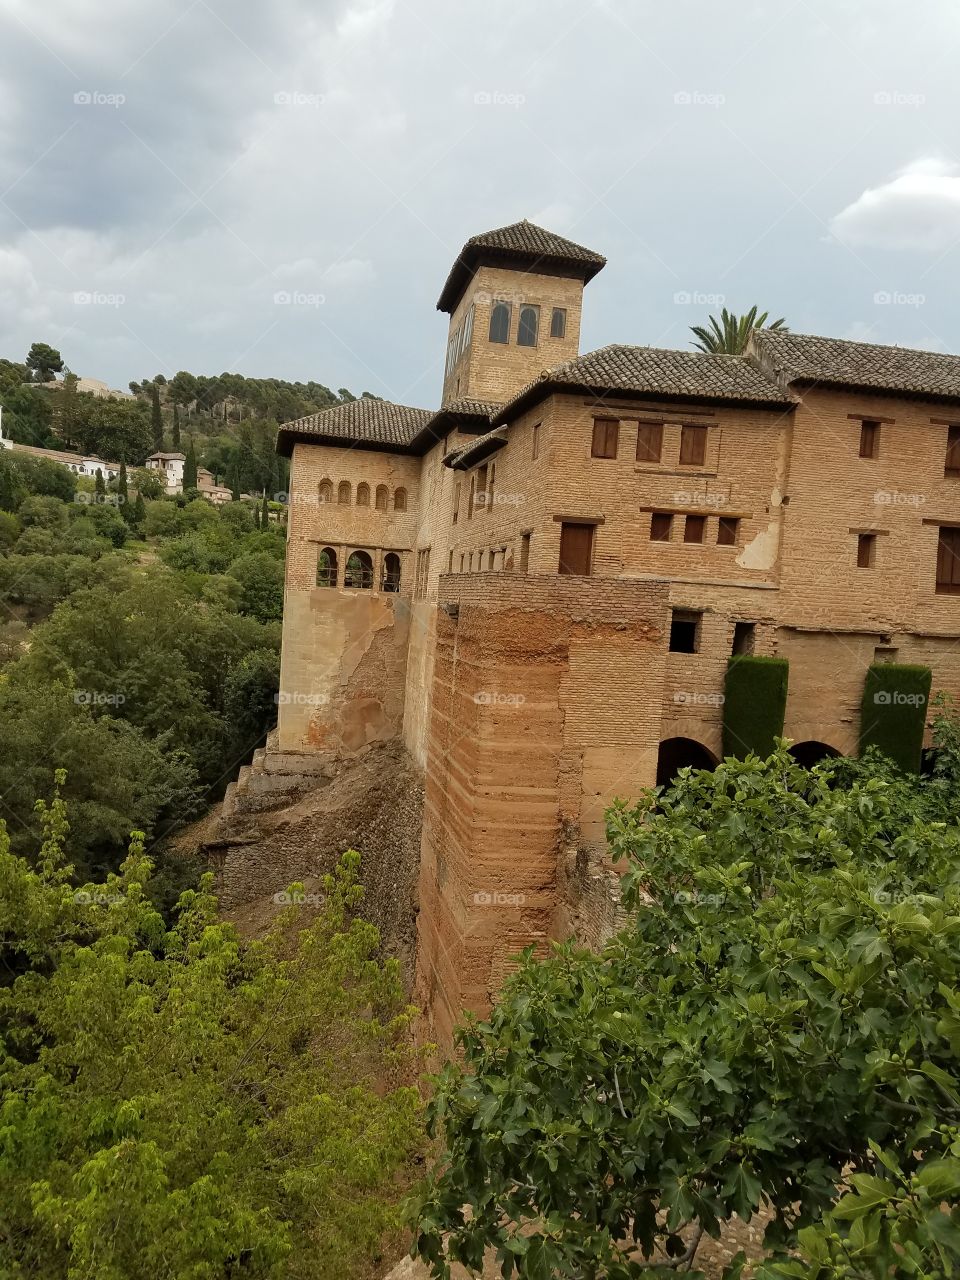 Alhambra palaces